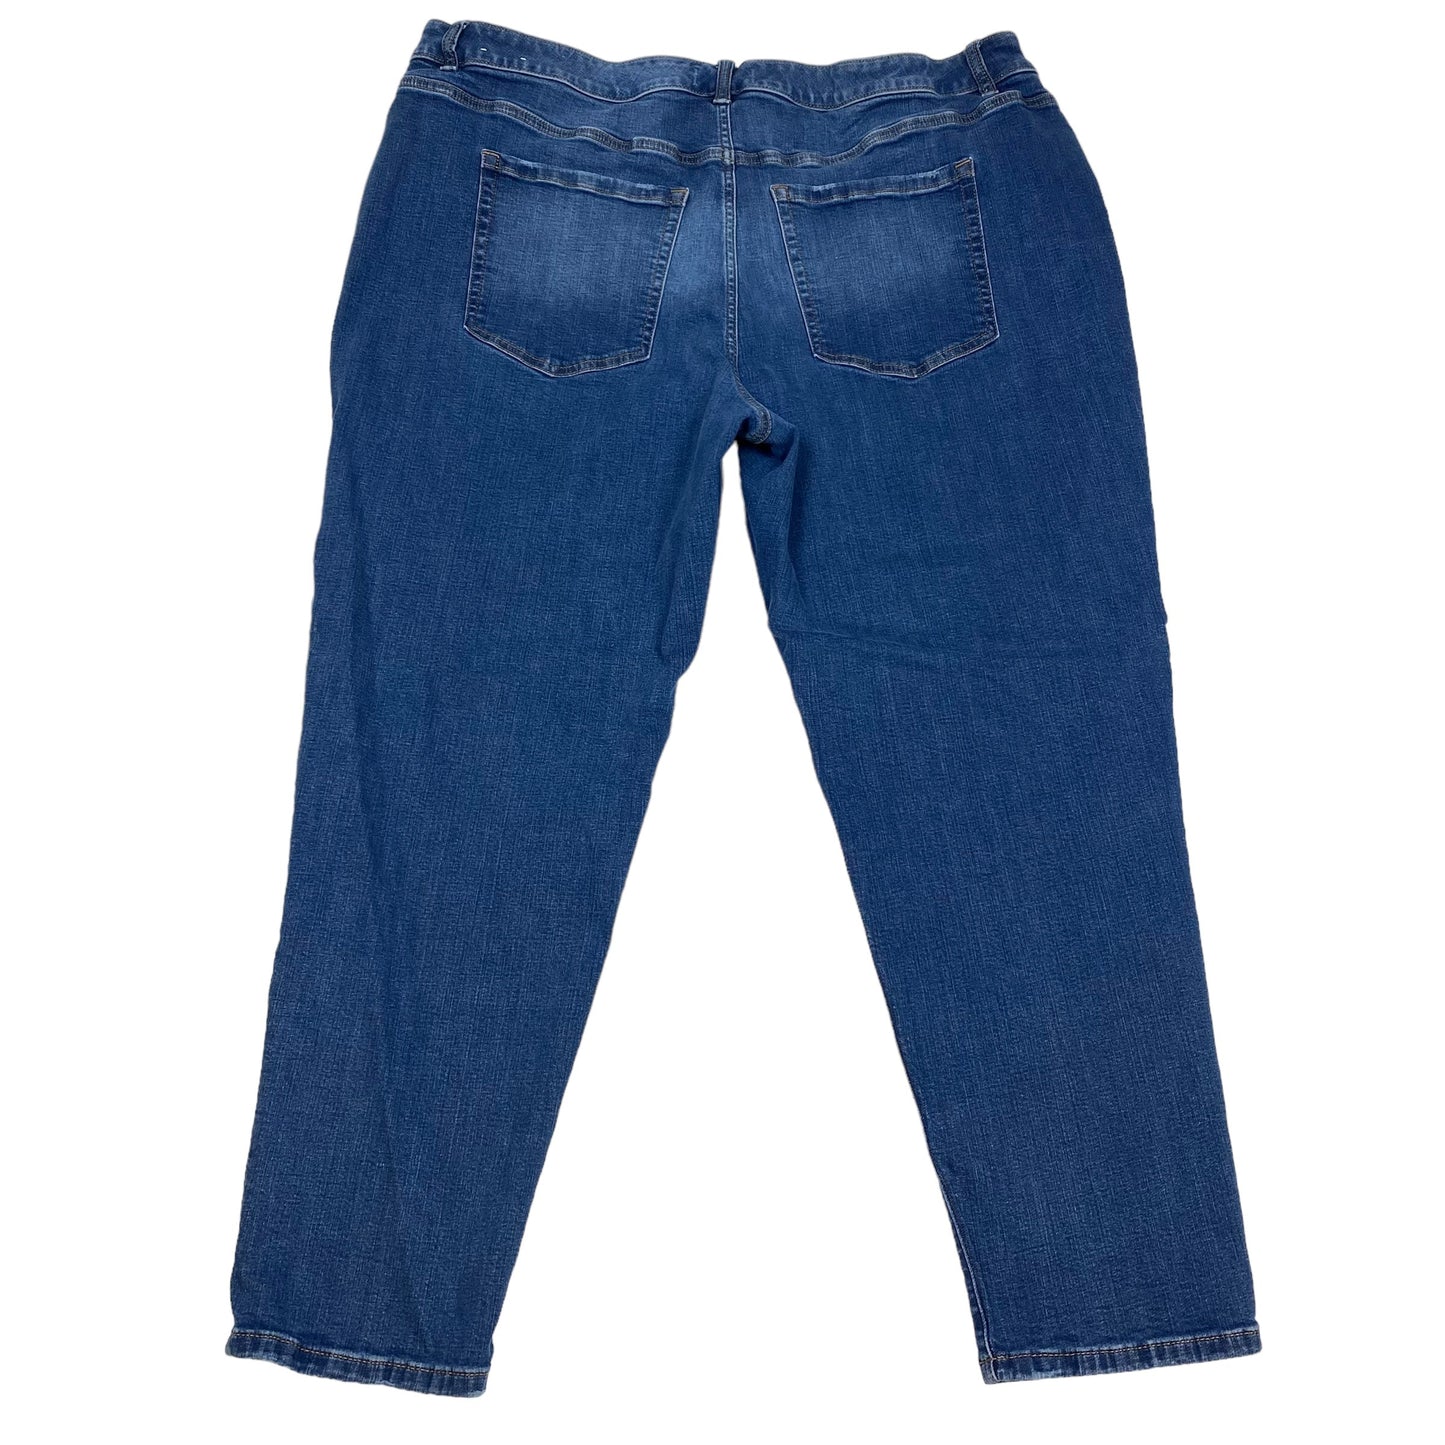 Blue Denim Jeans Straight Lane Bryant, Size 22